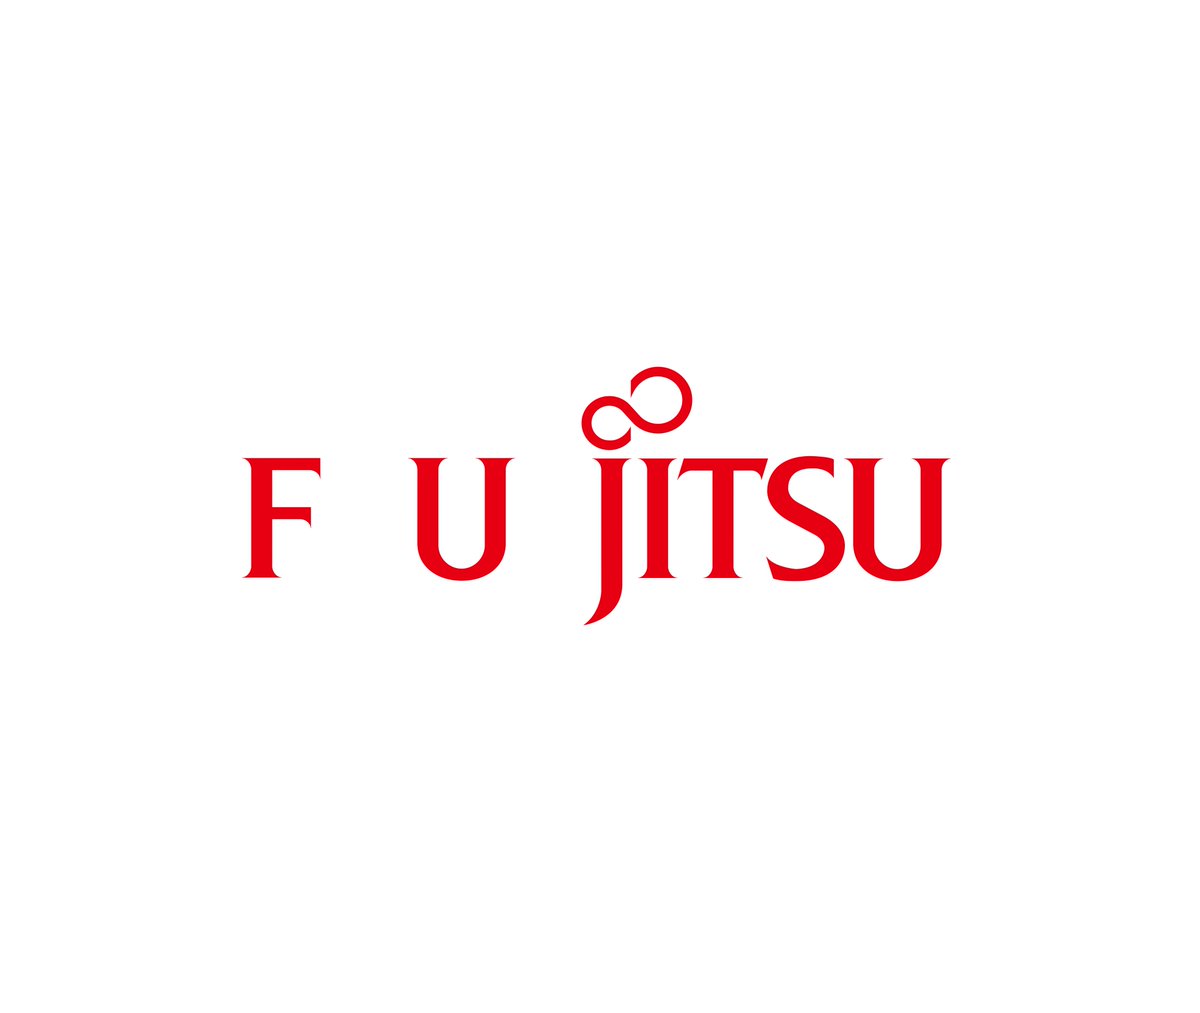 Spacing matters

#Fujitsu #FujitsuPostOfficeScandal #PostOfficeScandal